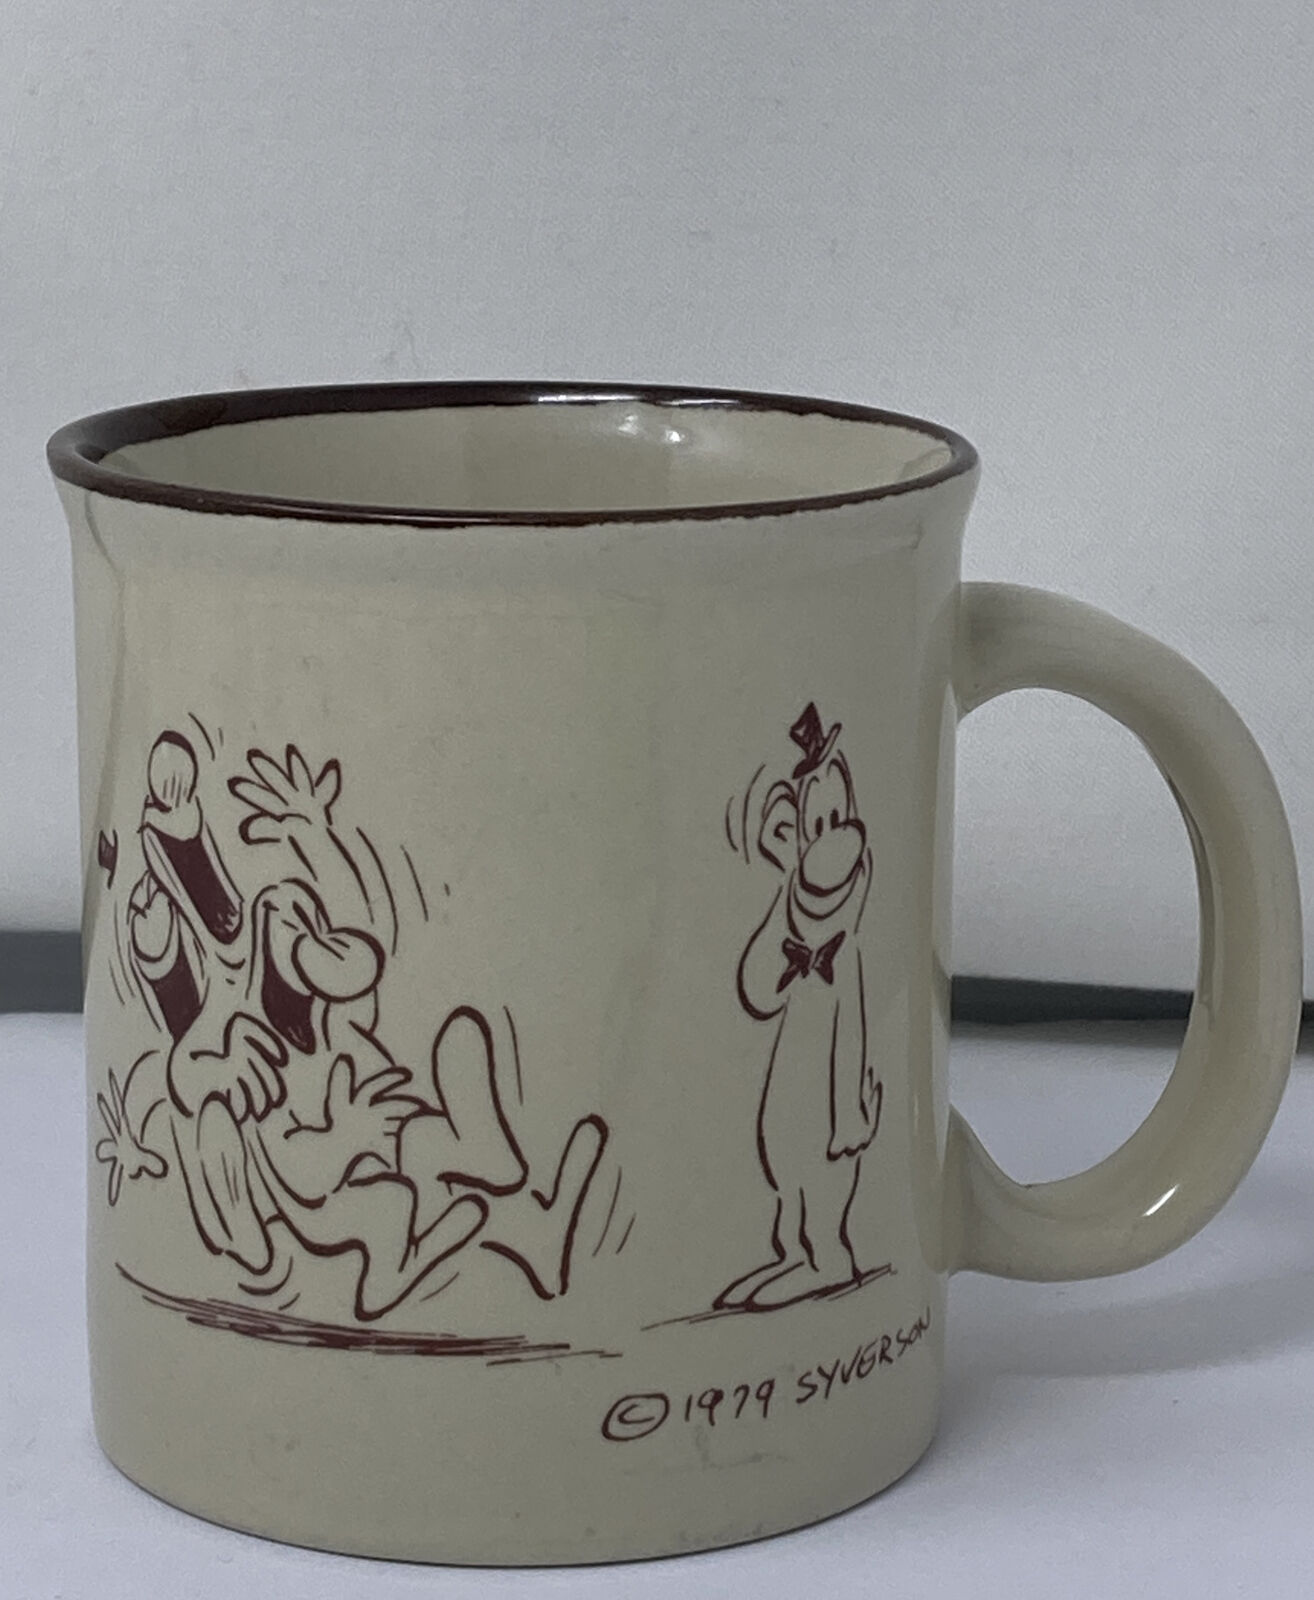 1979 Henry Hank Syverson Laughing Cartoon Coffee Mug Cup Made in Japan